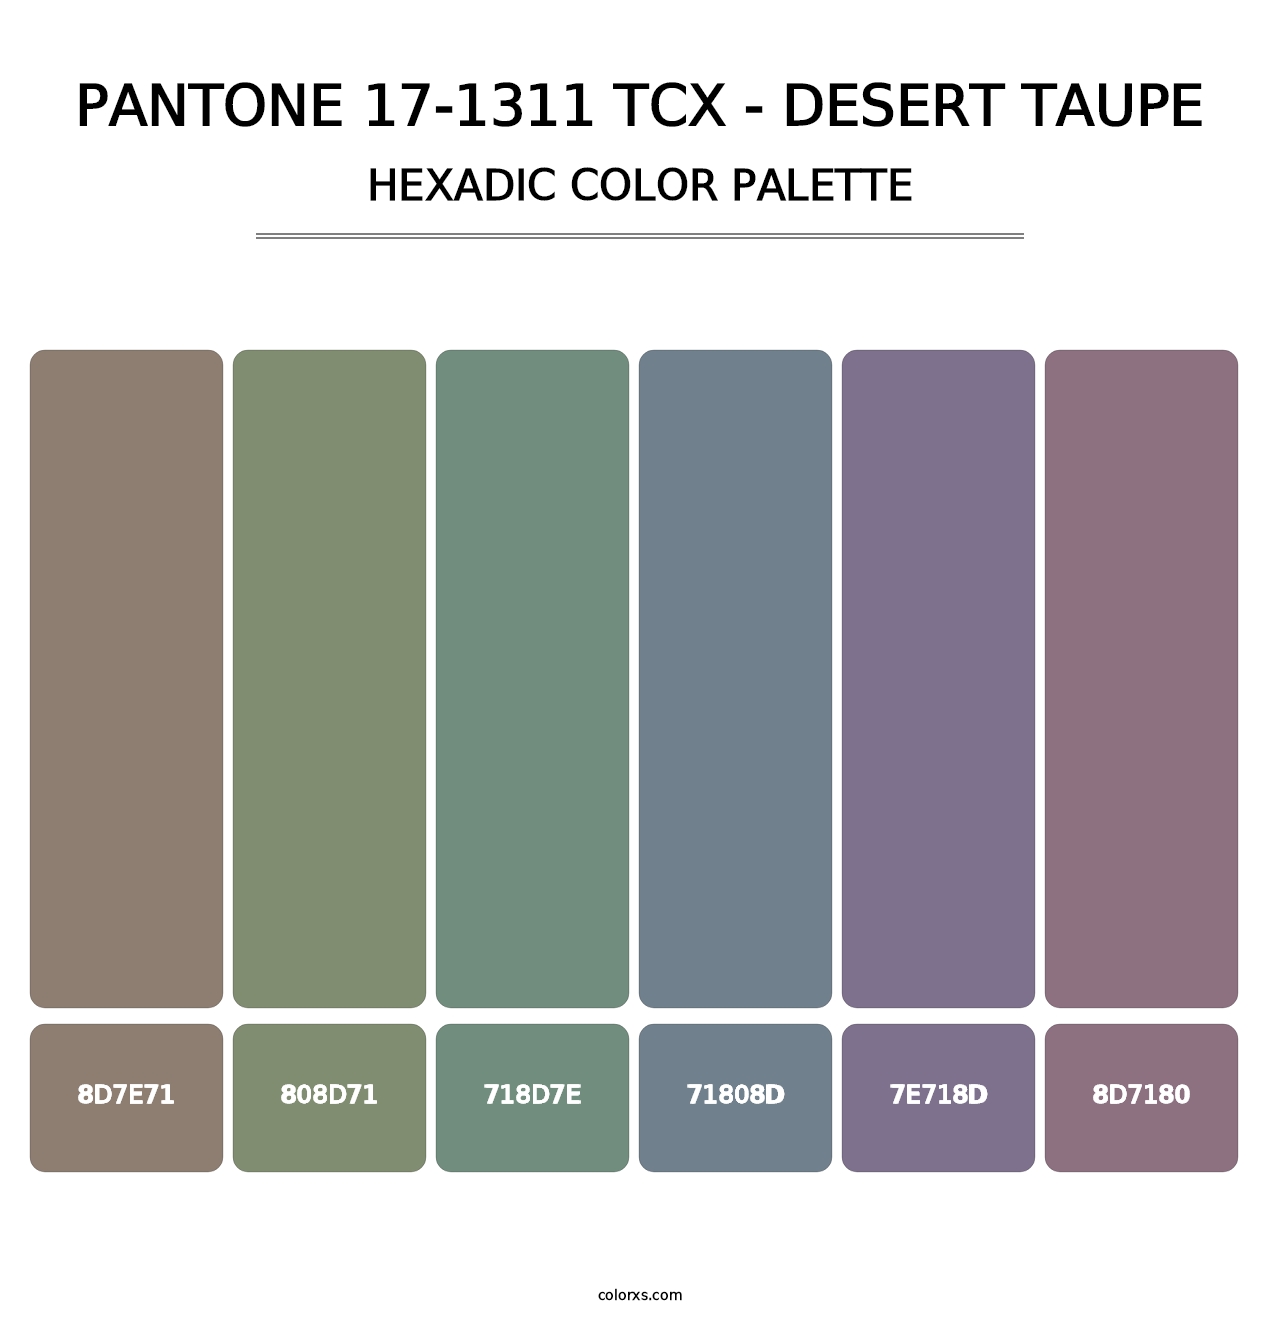 PANTONE 17-1311 TCX - Desert Taupe - Hexadic Color Palette